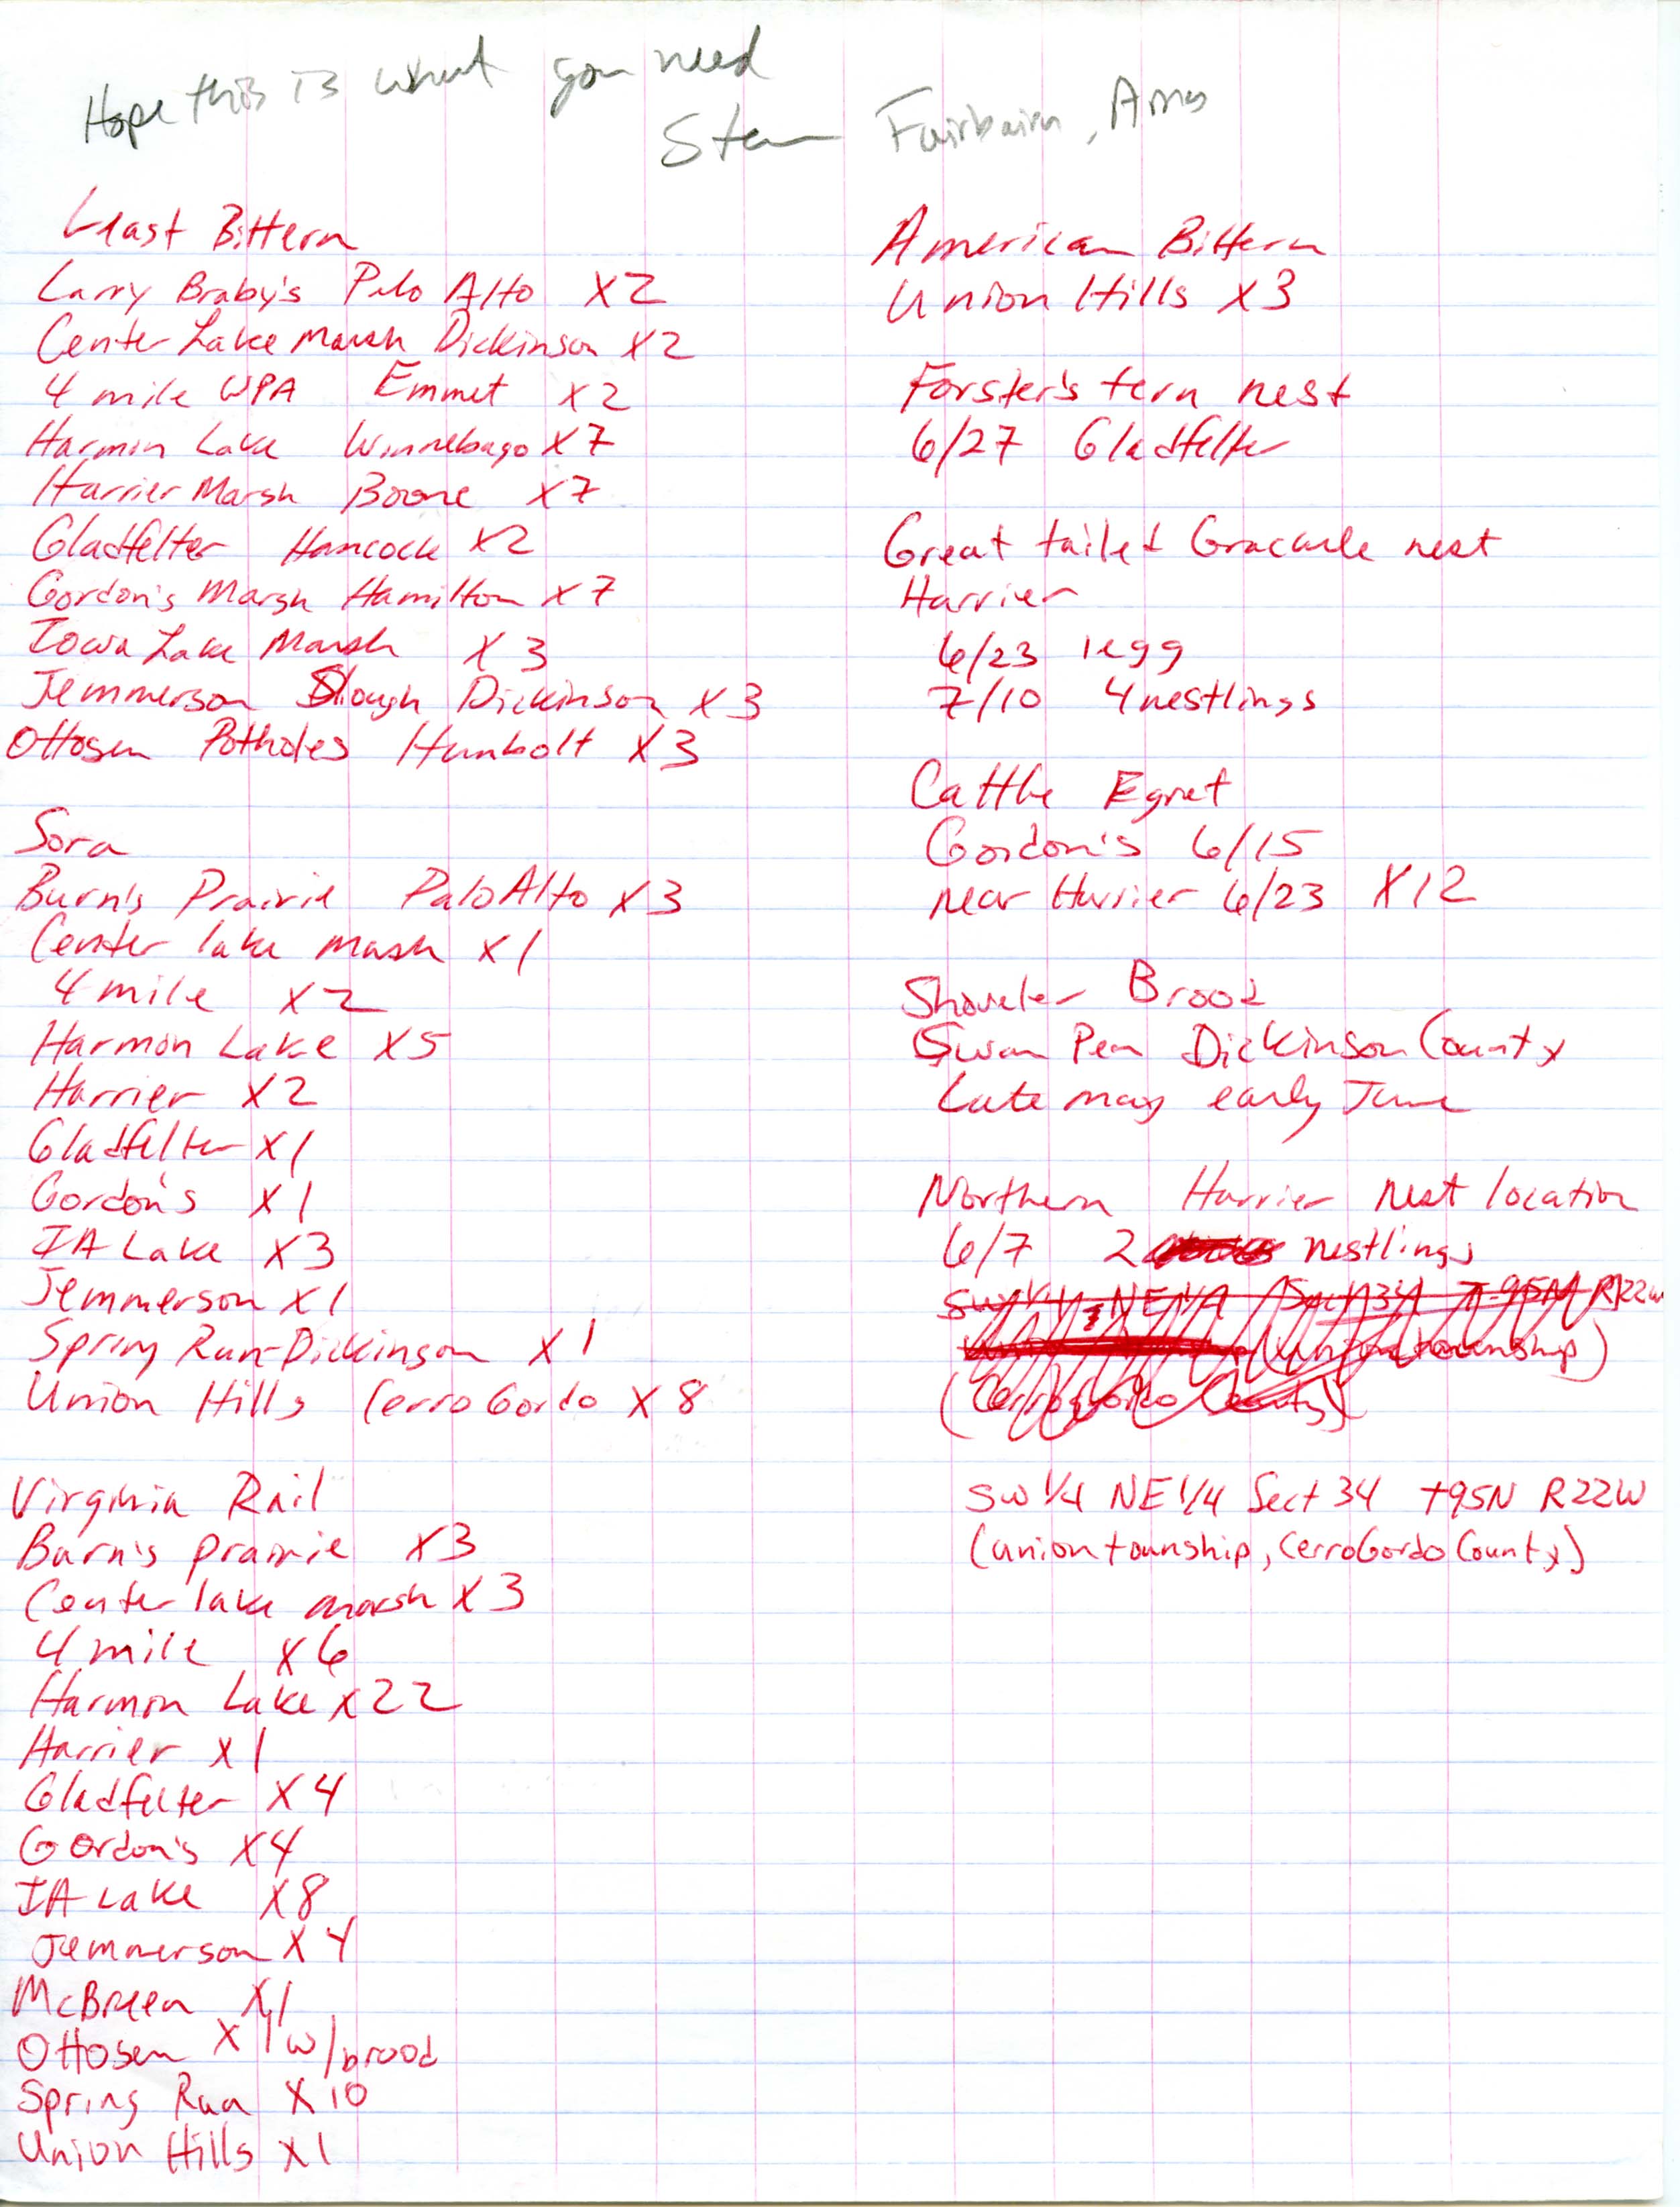 Annotated bird sighting list for summer 1998 compiled by Steve Fairbairn